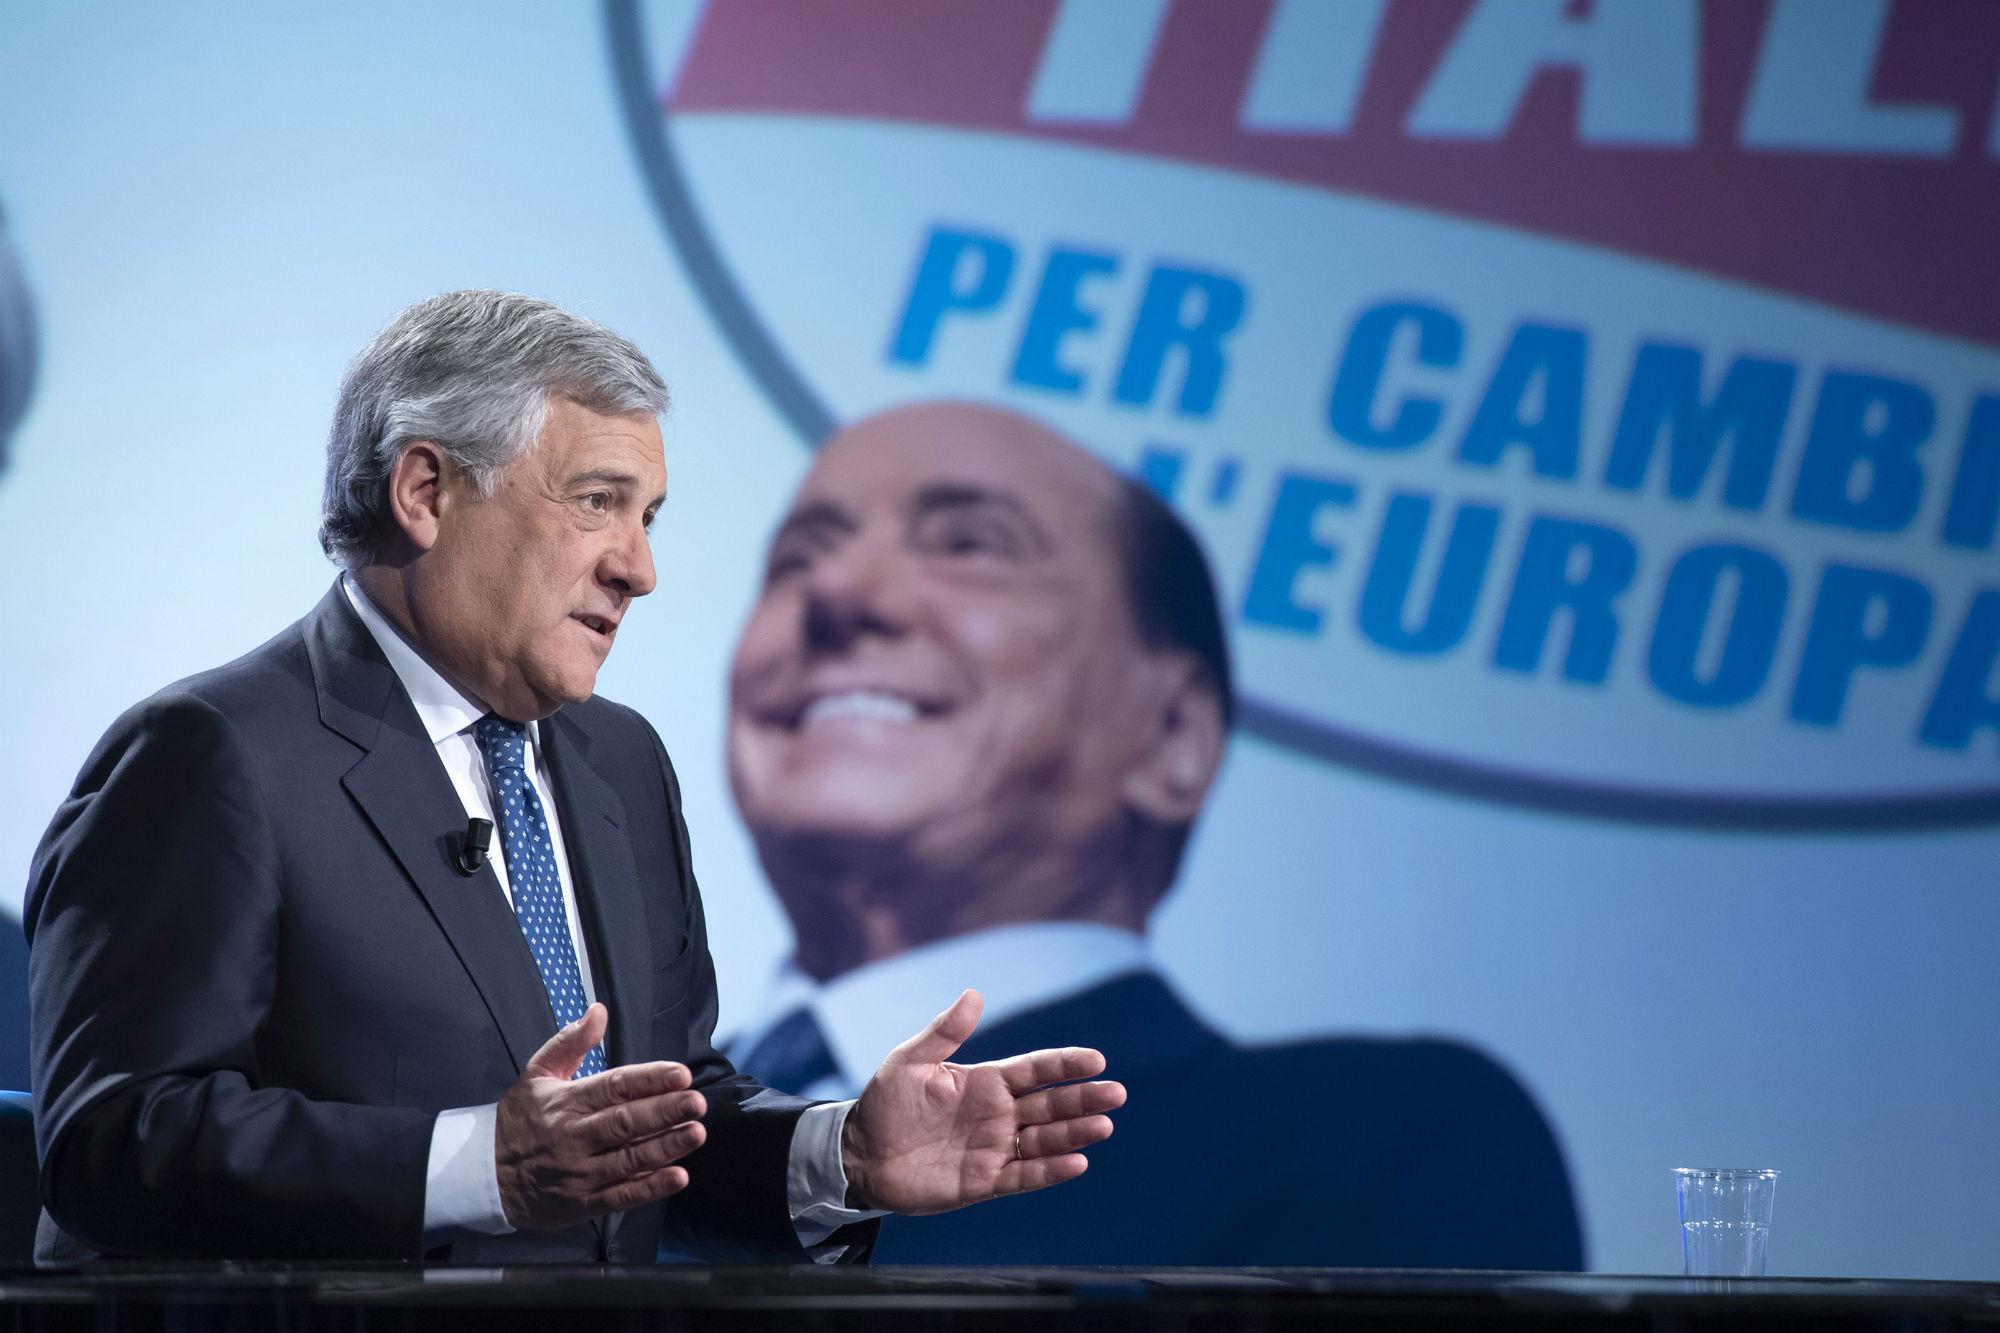 Caro energia, Tajani: "Tagliare le bollette senza imporre nuove tasse alle imprese"